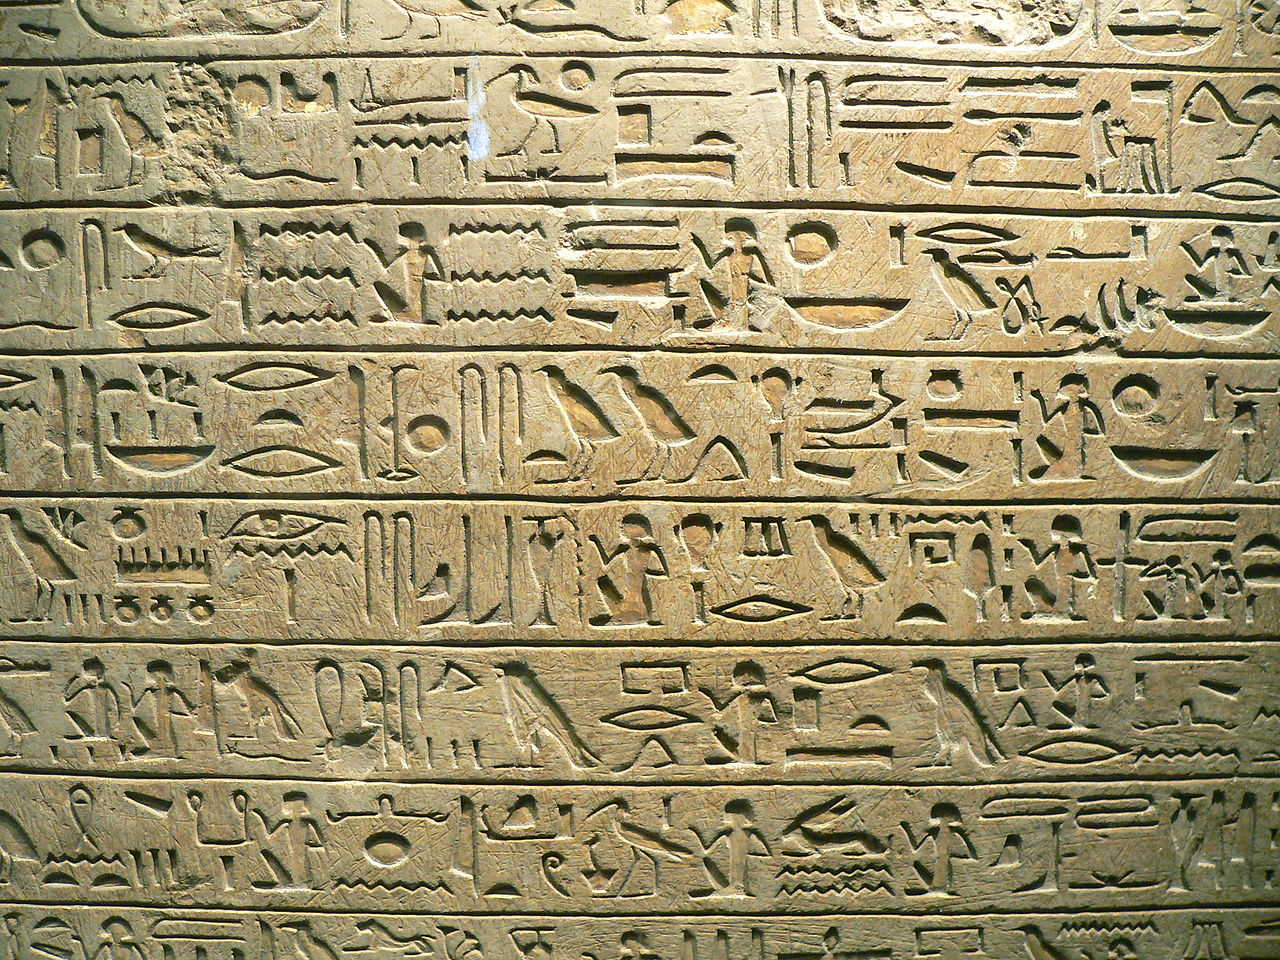 Hieroglyphs on stela in Louvre, circa 1321 BC.